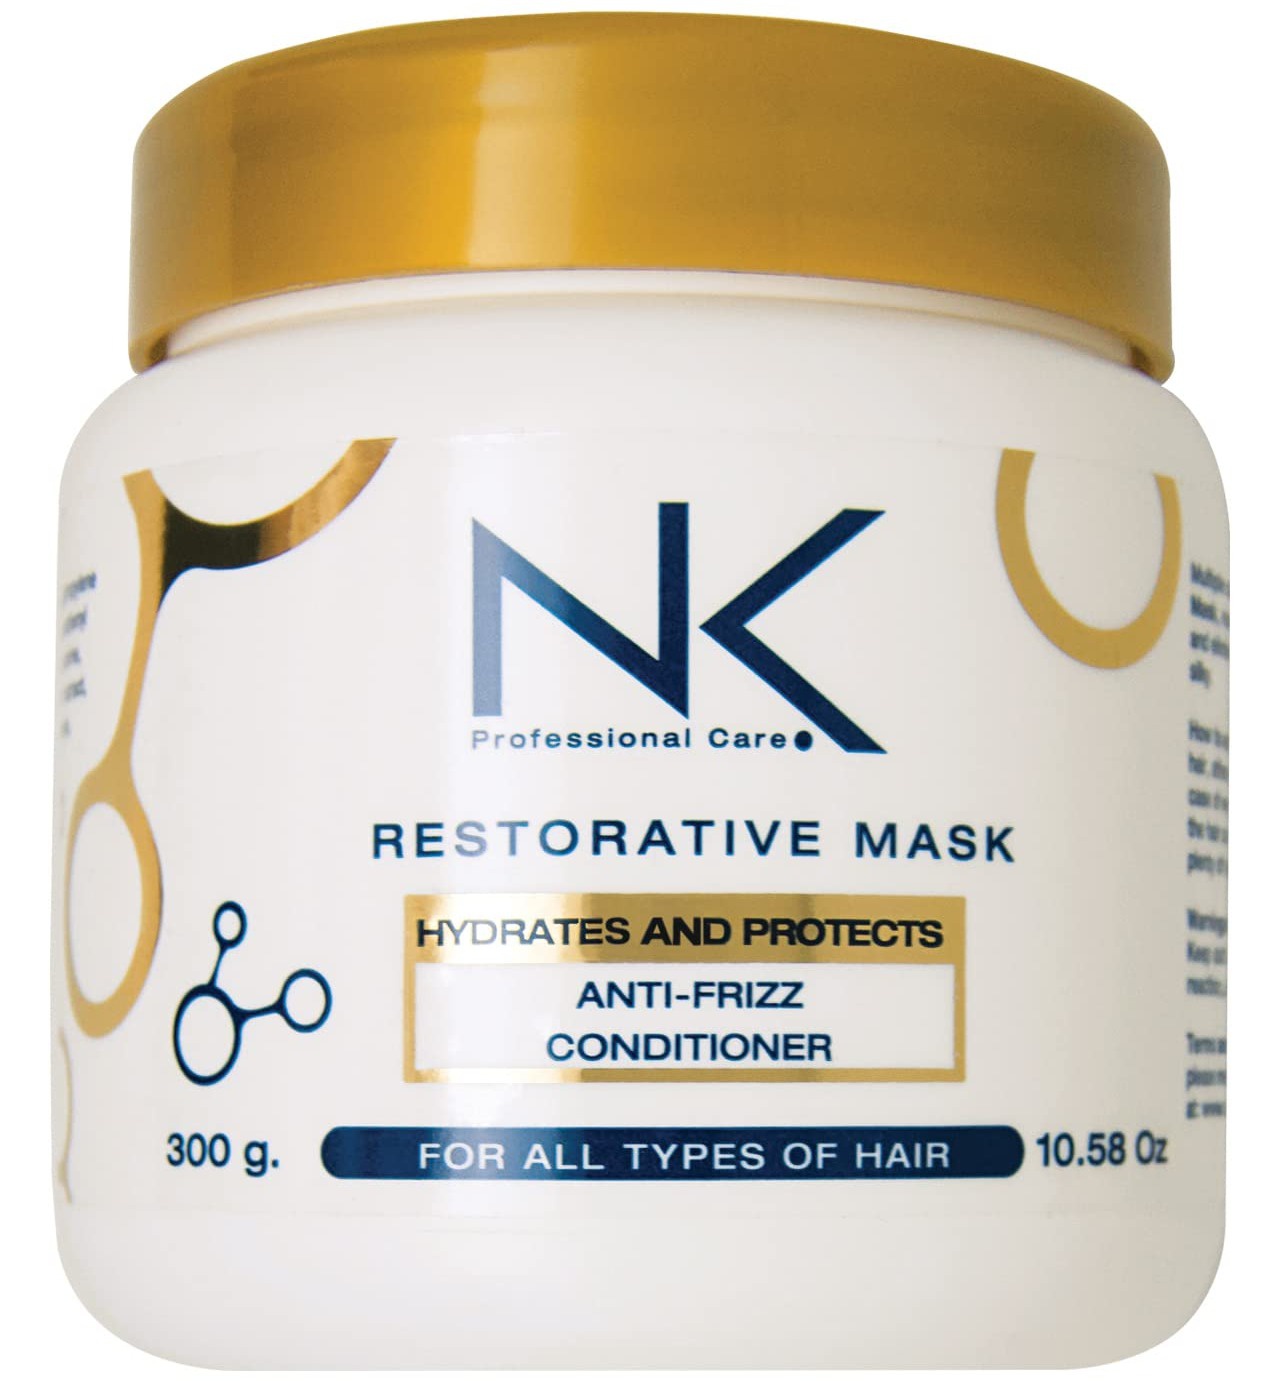 NK Professional Care Restorative Mask